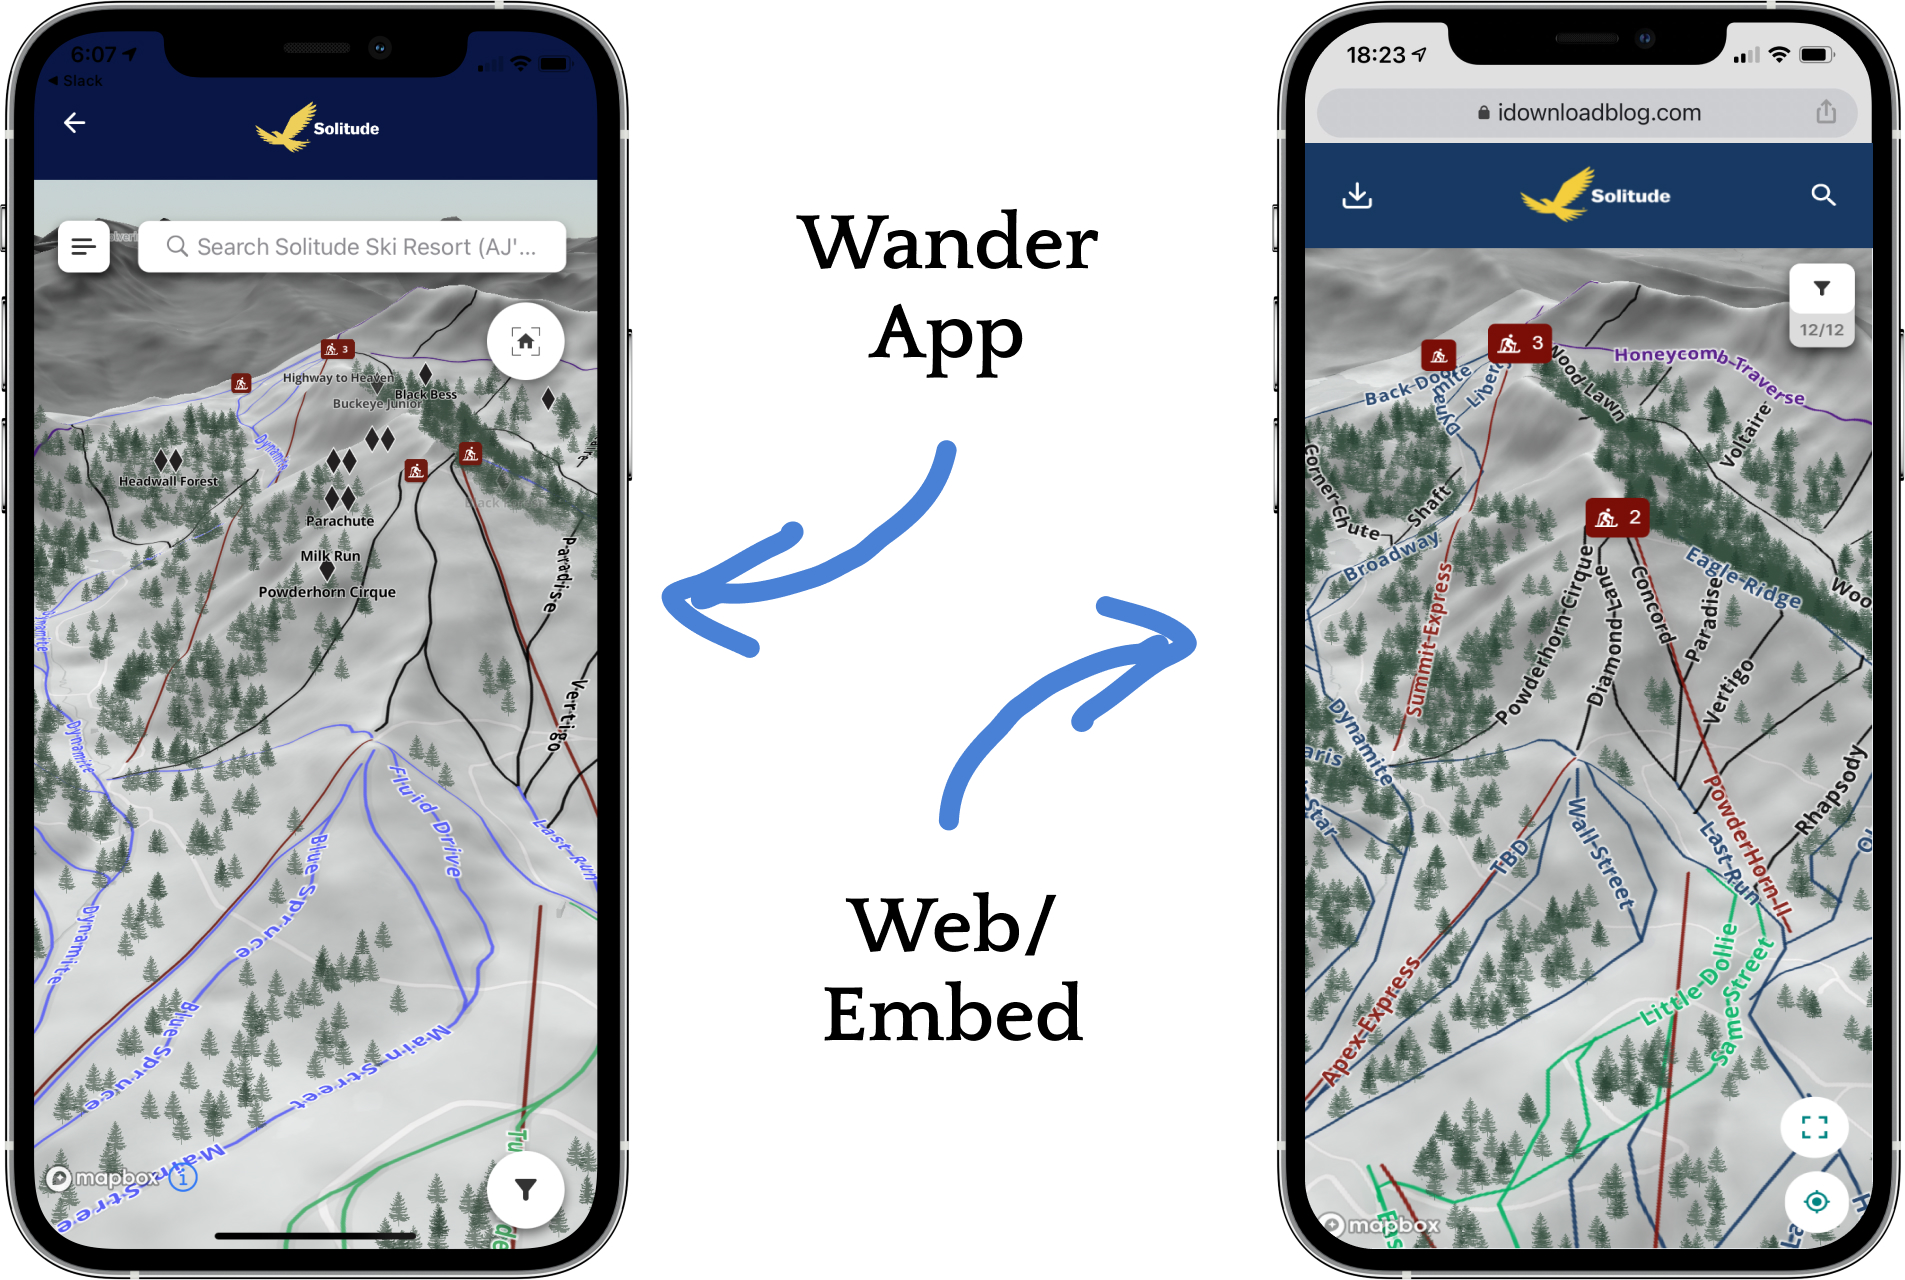 wander map app view vs web view